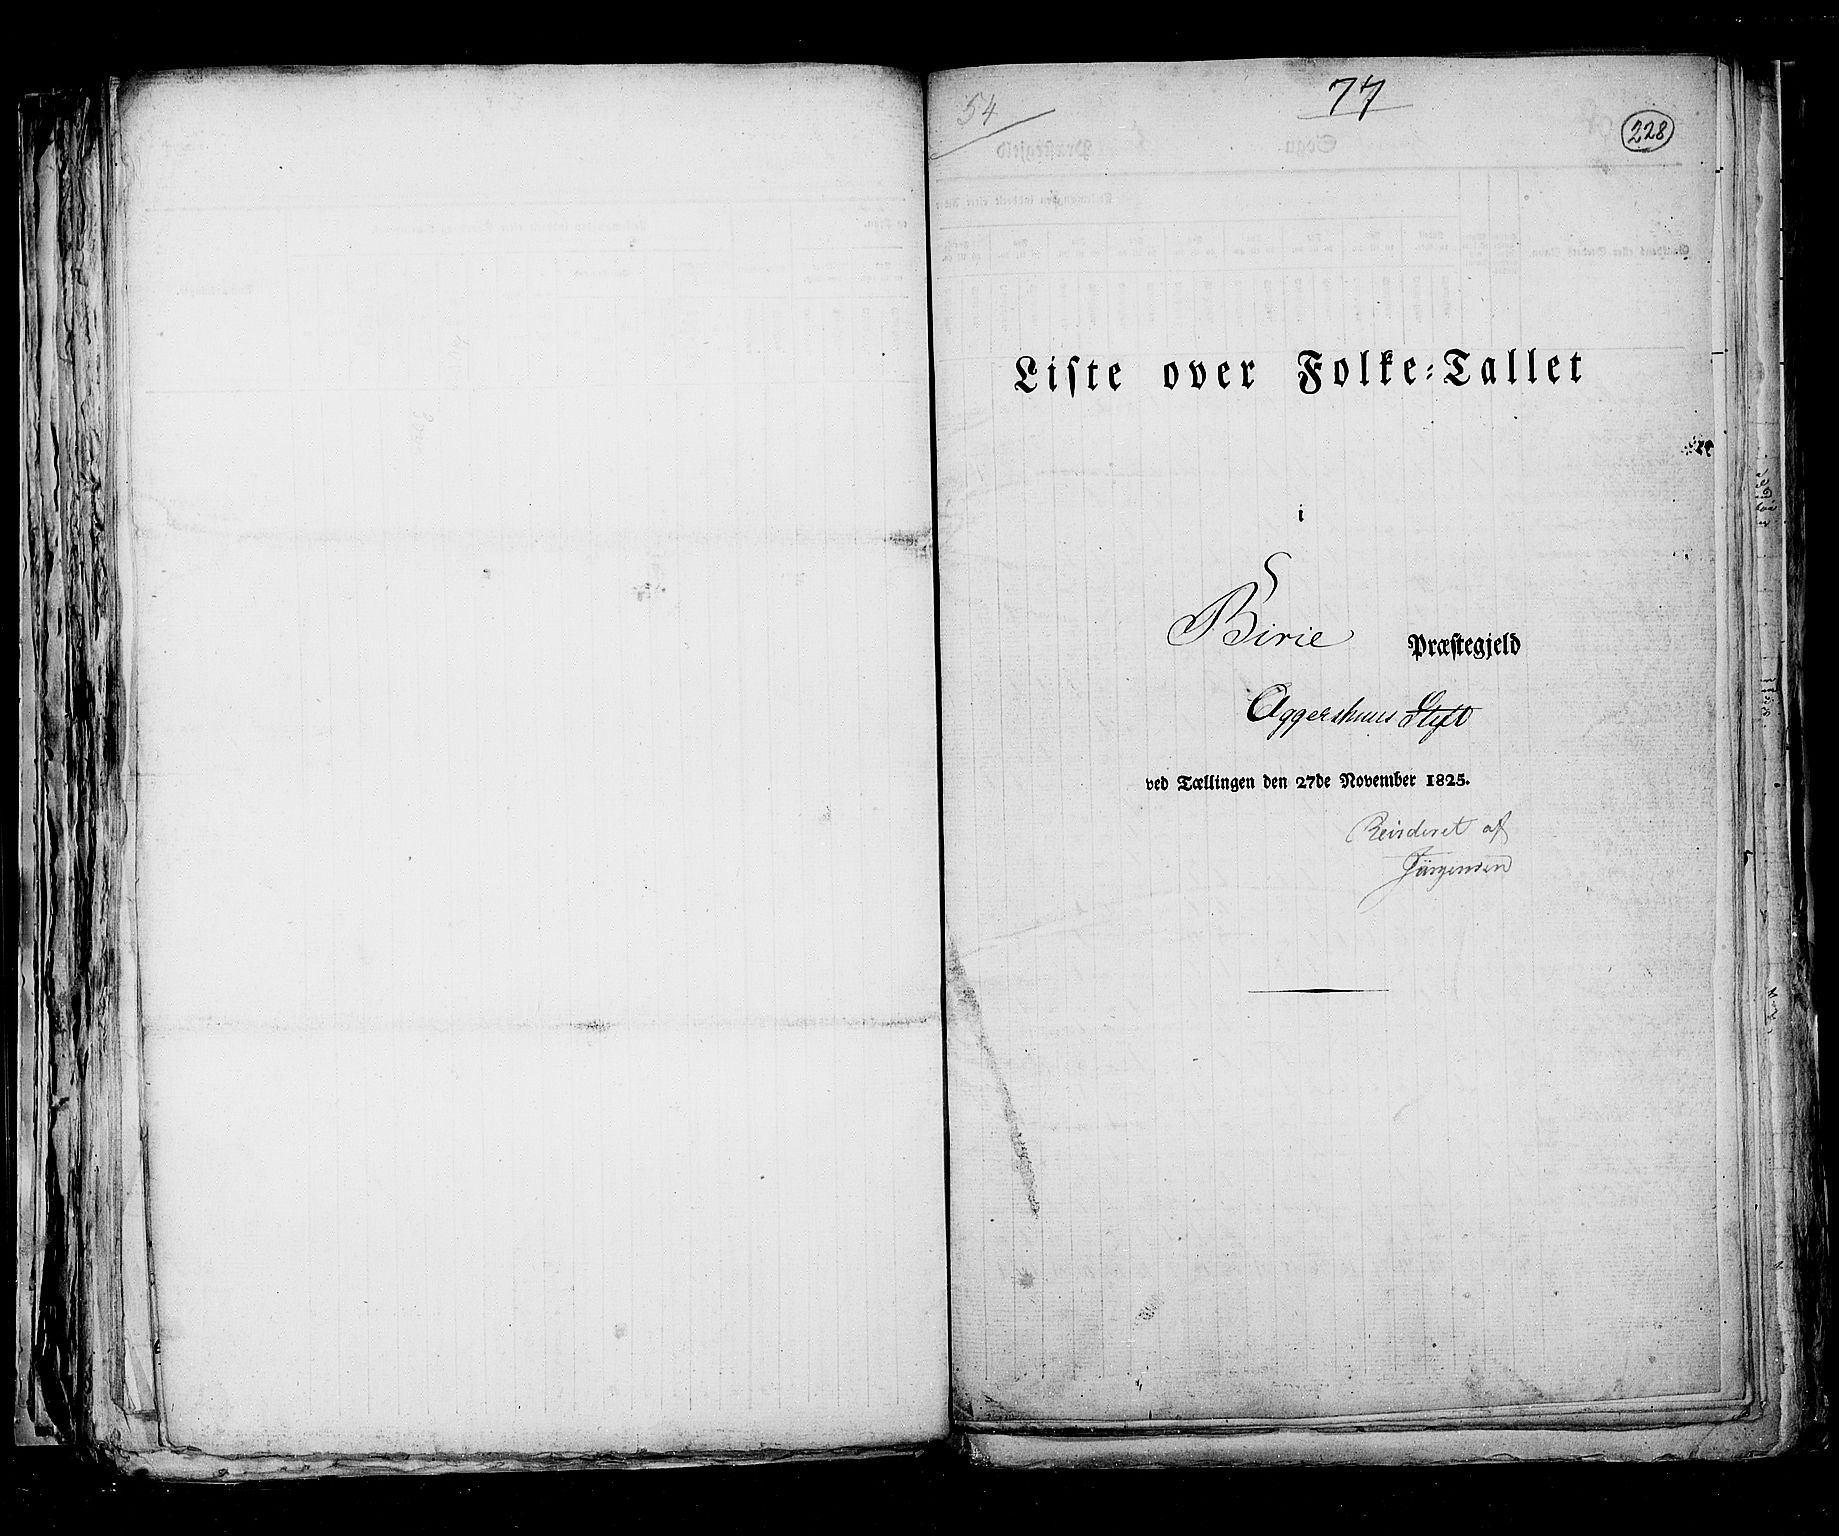 RA, Folketellingen 1825, bind 6: Kristians amt, 1825, s. 228